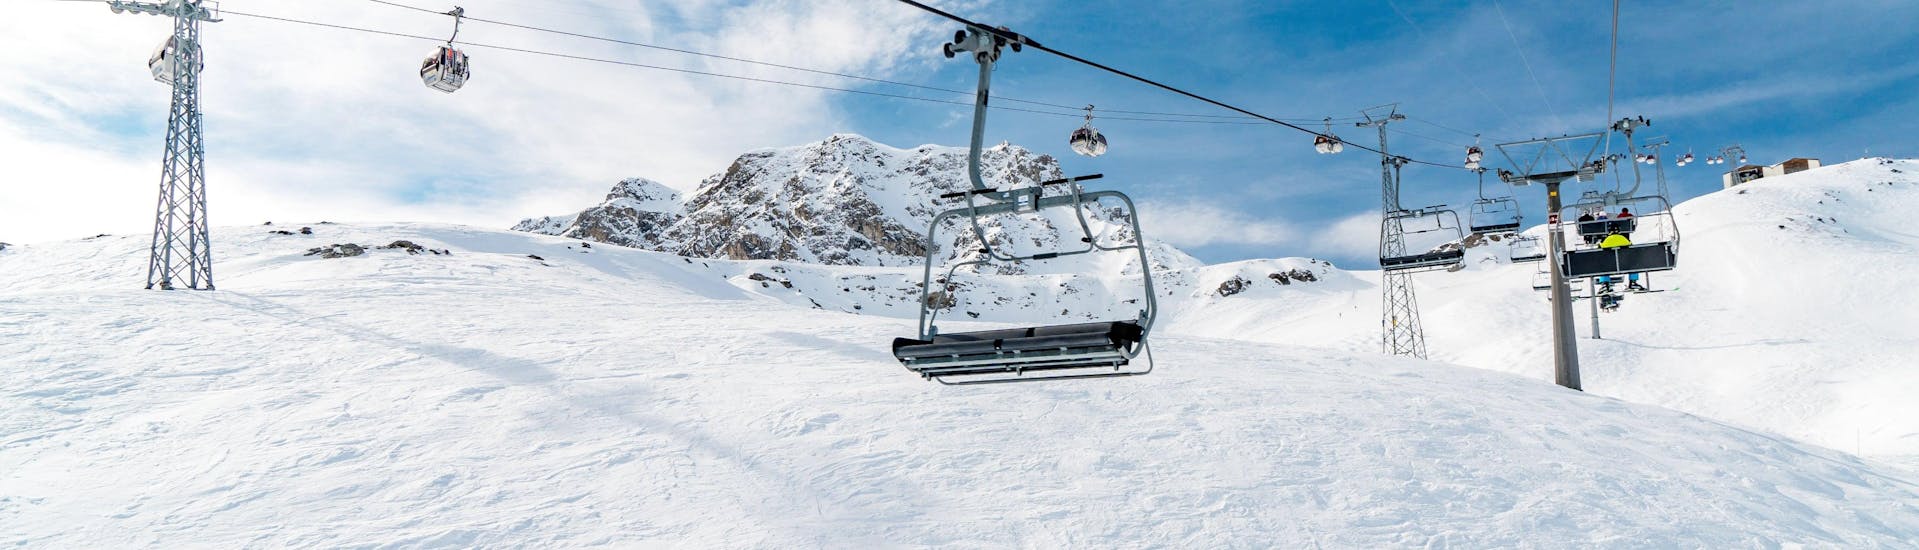 Ski lift on the slopes of Arosa, lenzerheide in Switzerland on a sunny day.